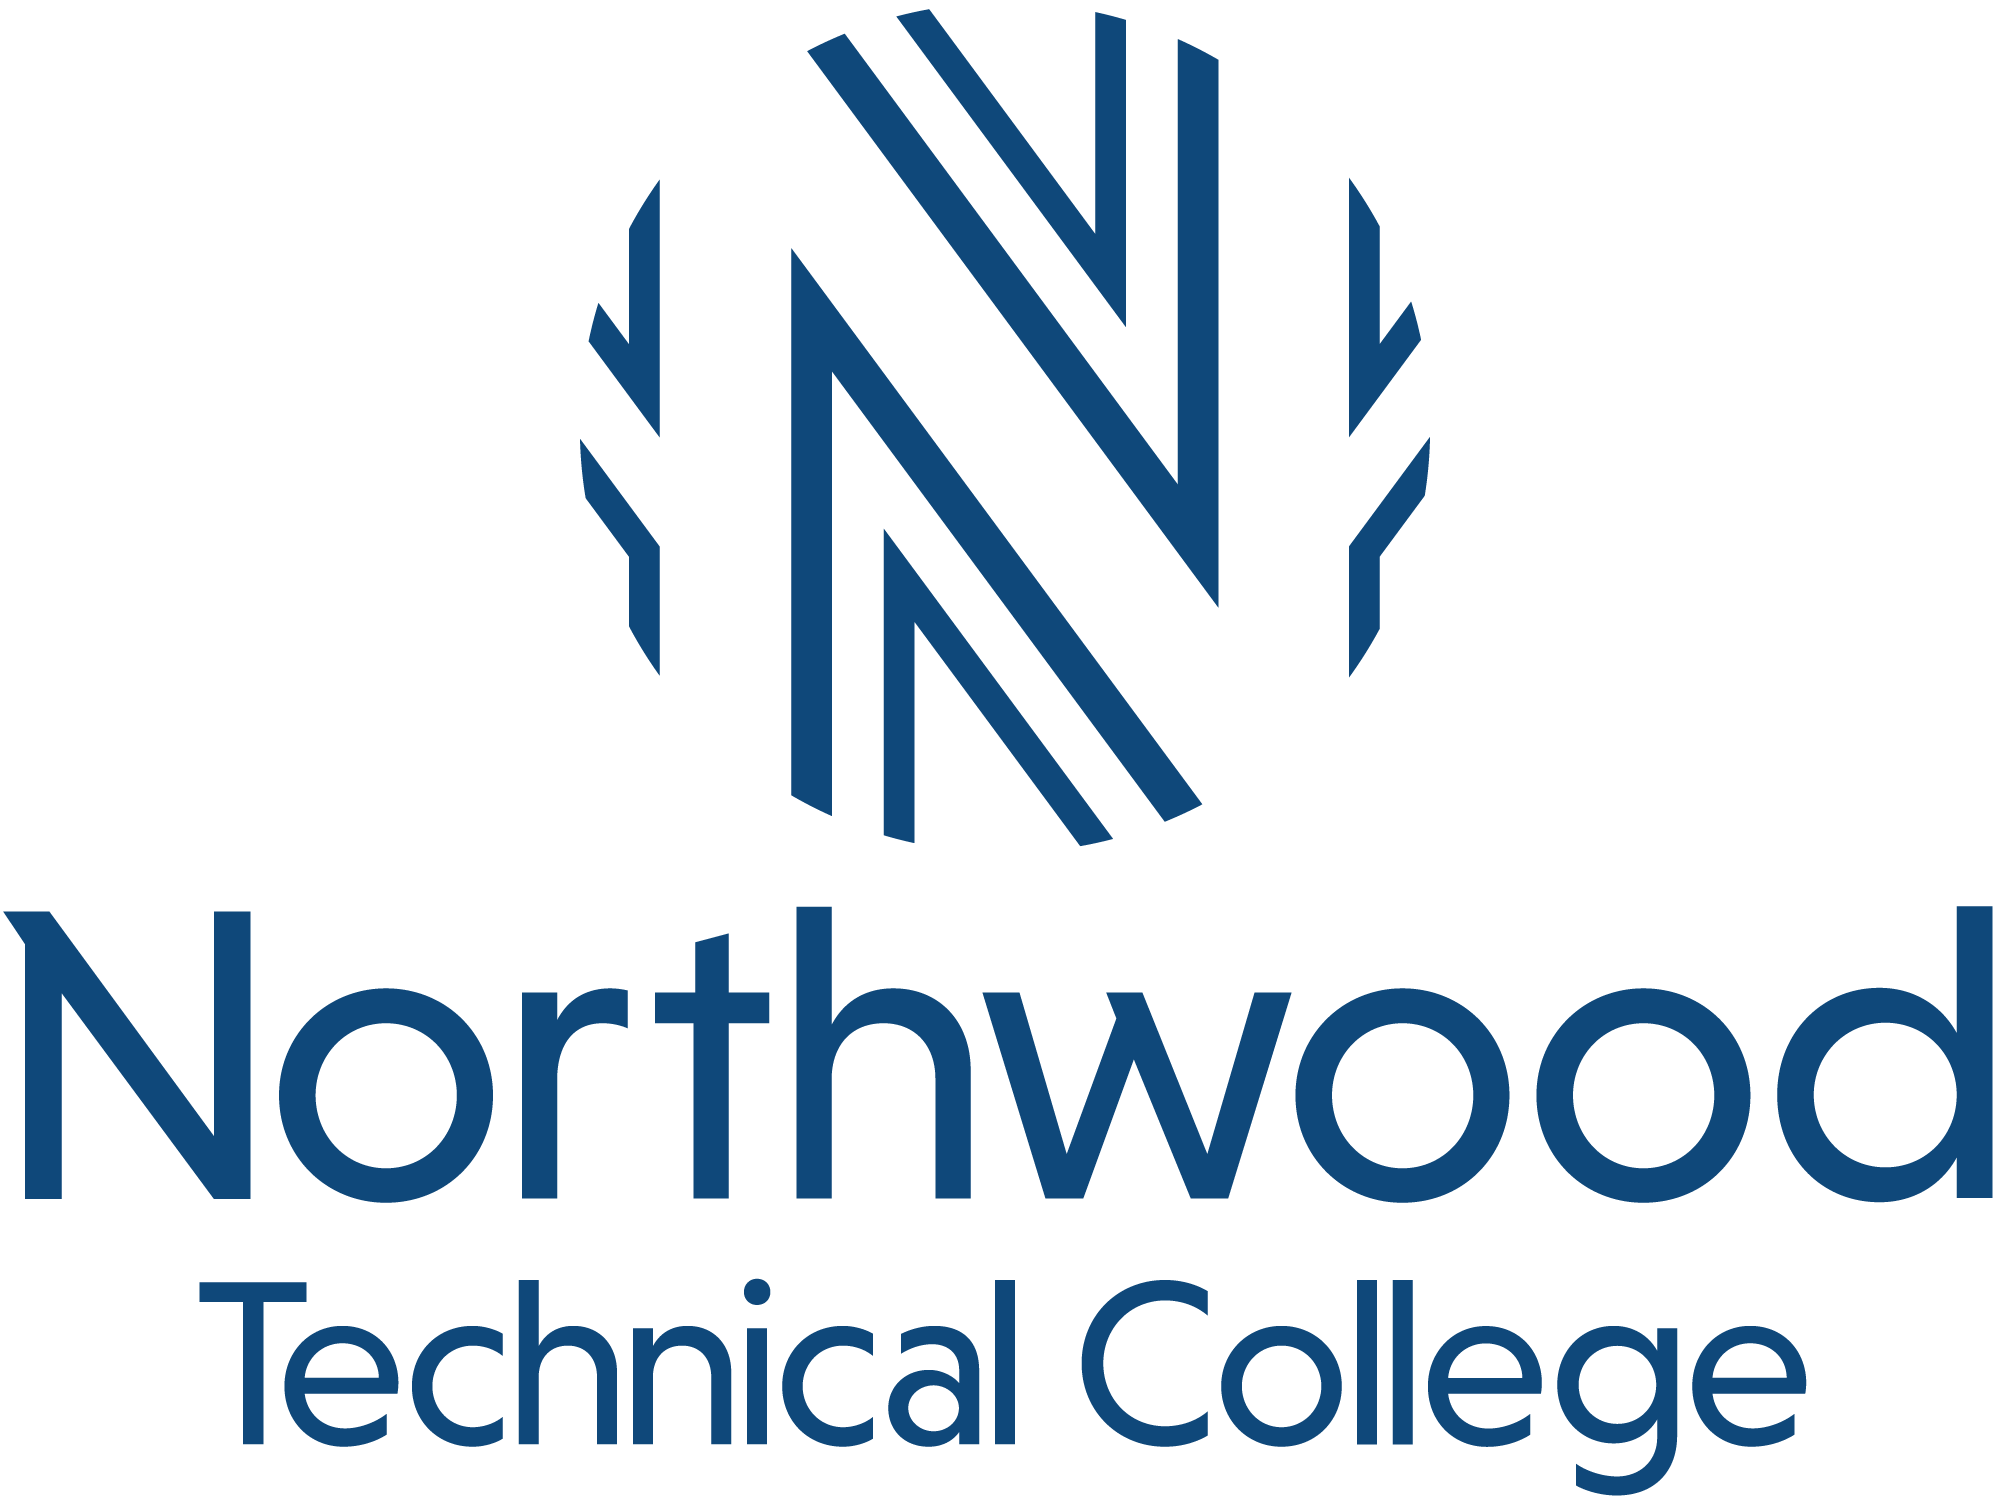 Northwood Technical College logo